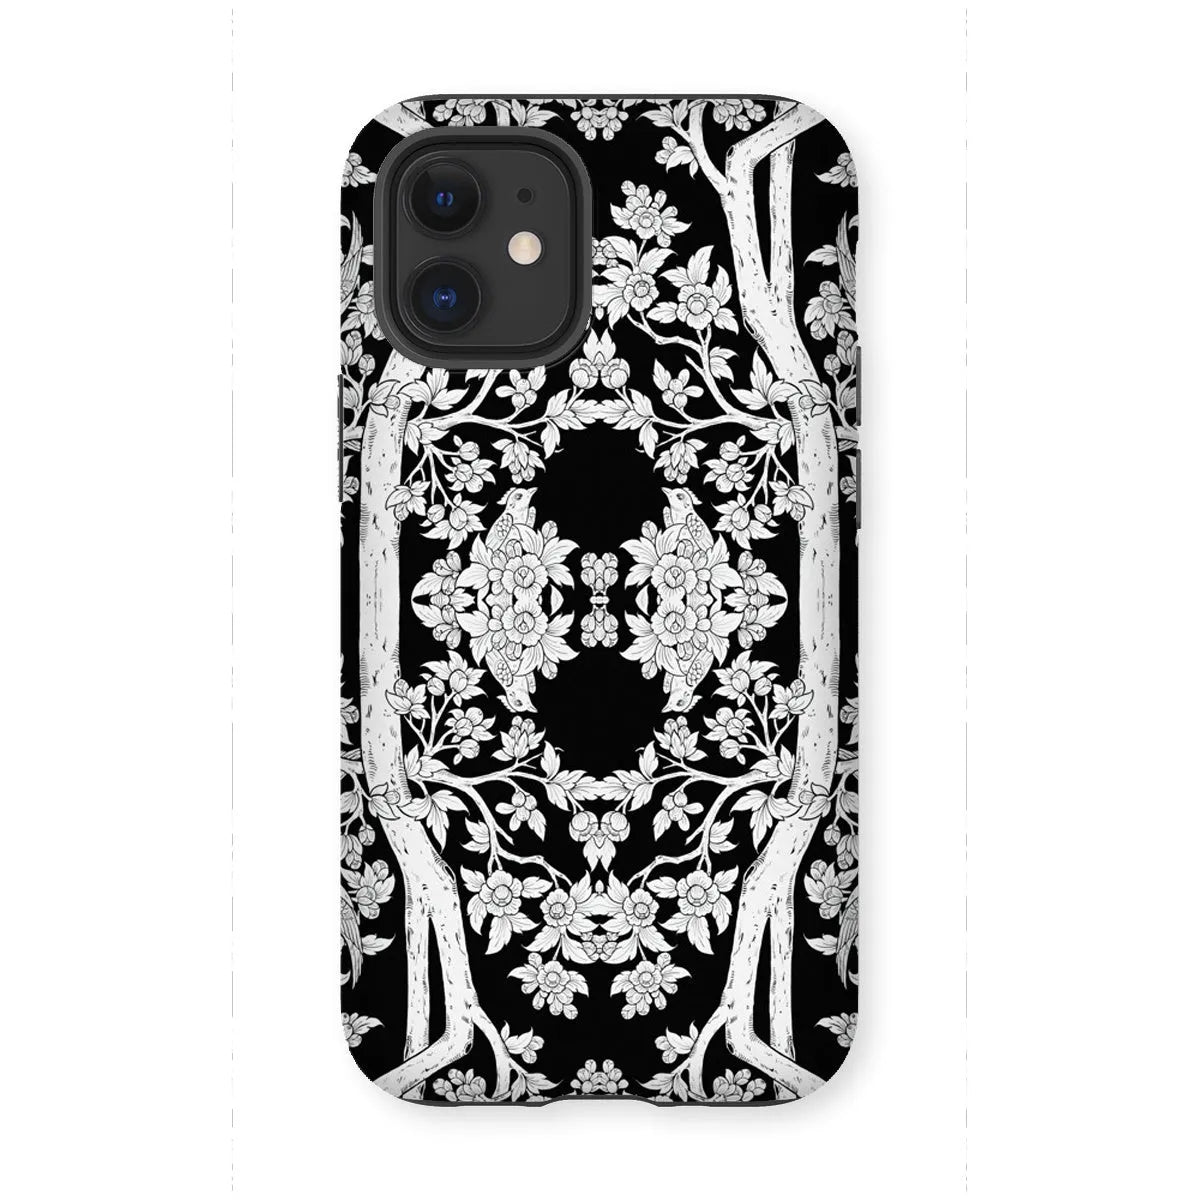 Aviary Black Aesthetic Pattern Art Phone Case - Iphone 12 Mini / Matte - Mobile Phone Cases - Aesthetic Art